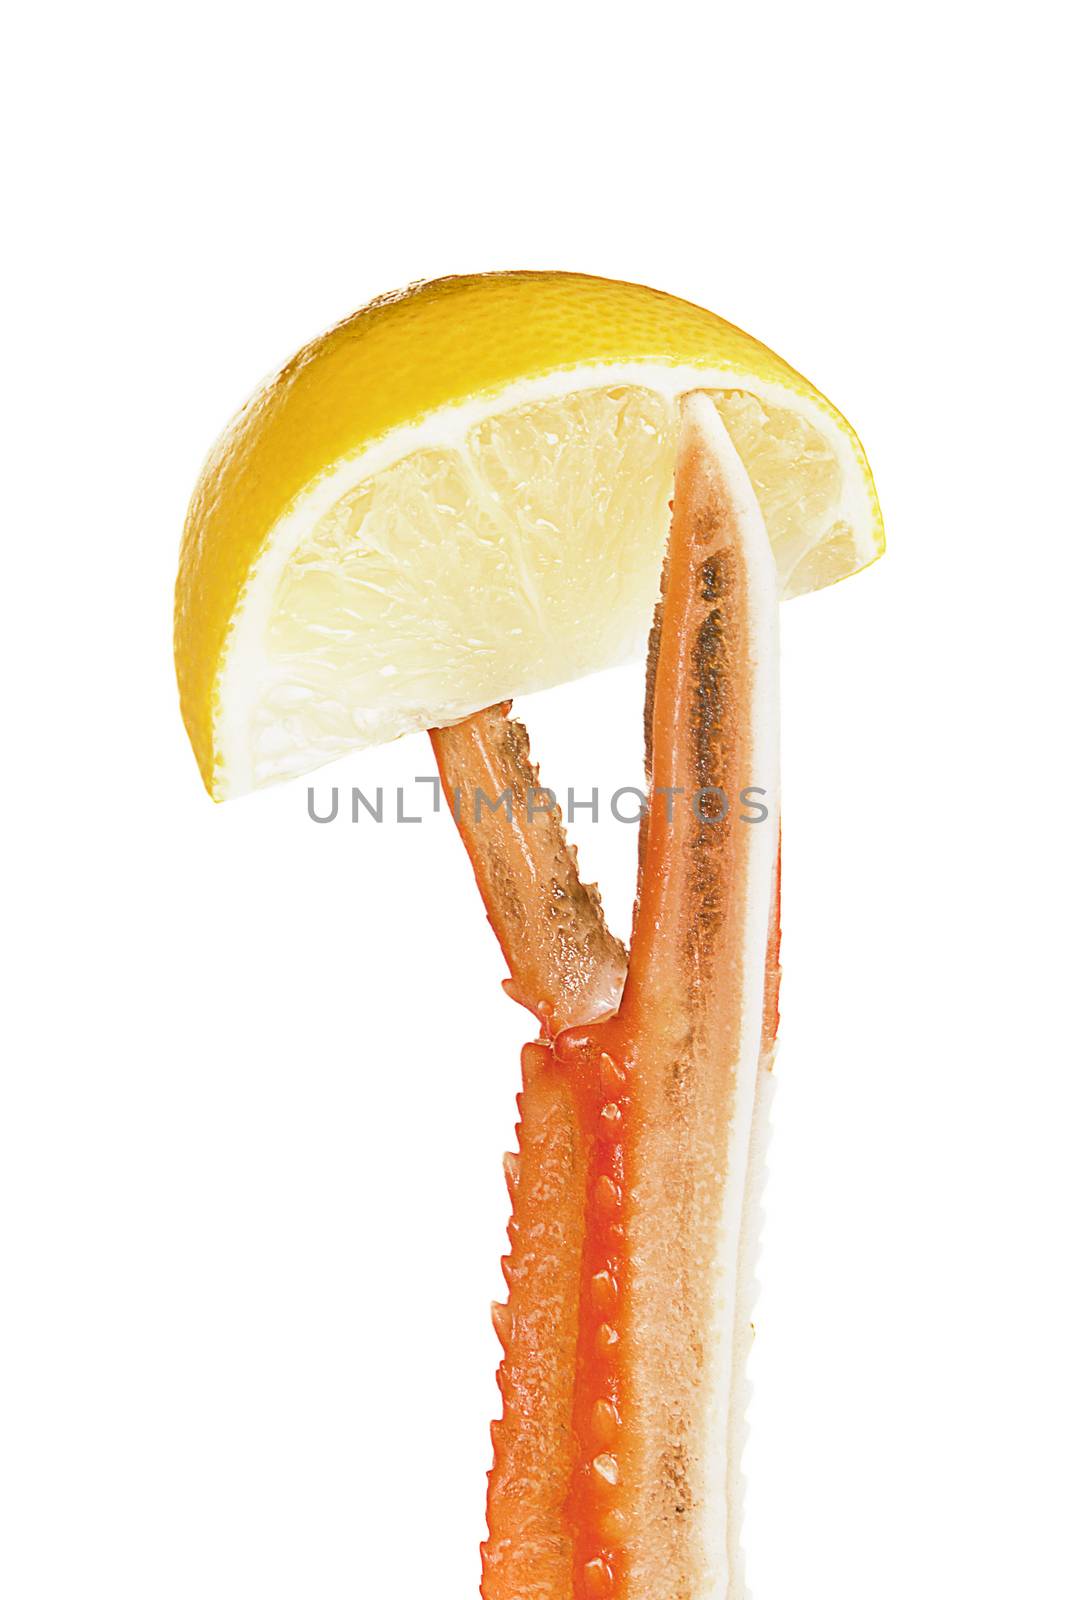 Seafood concept. Languoustine holding lemon isolated on white background.